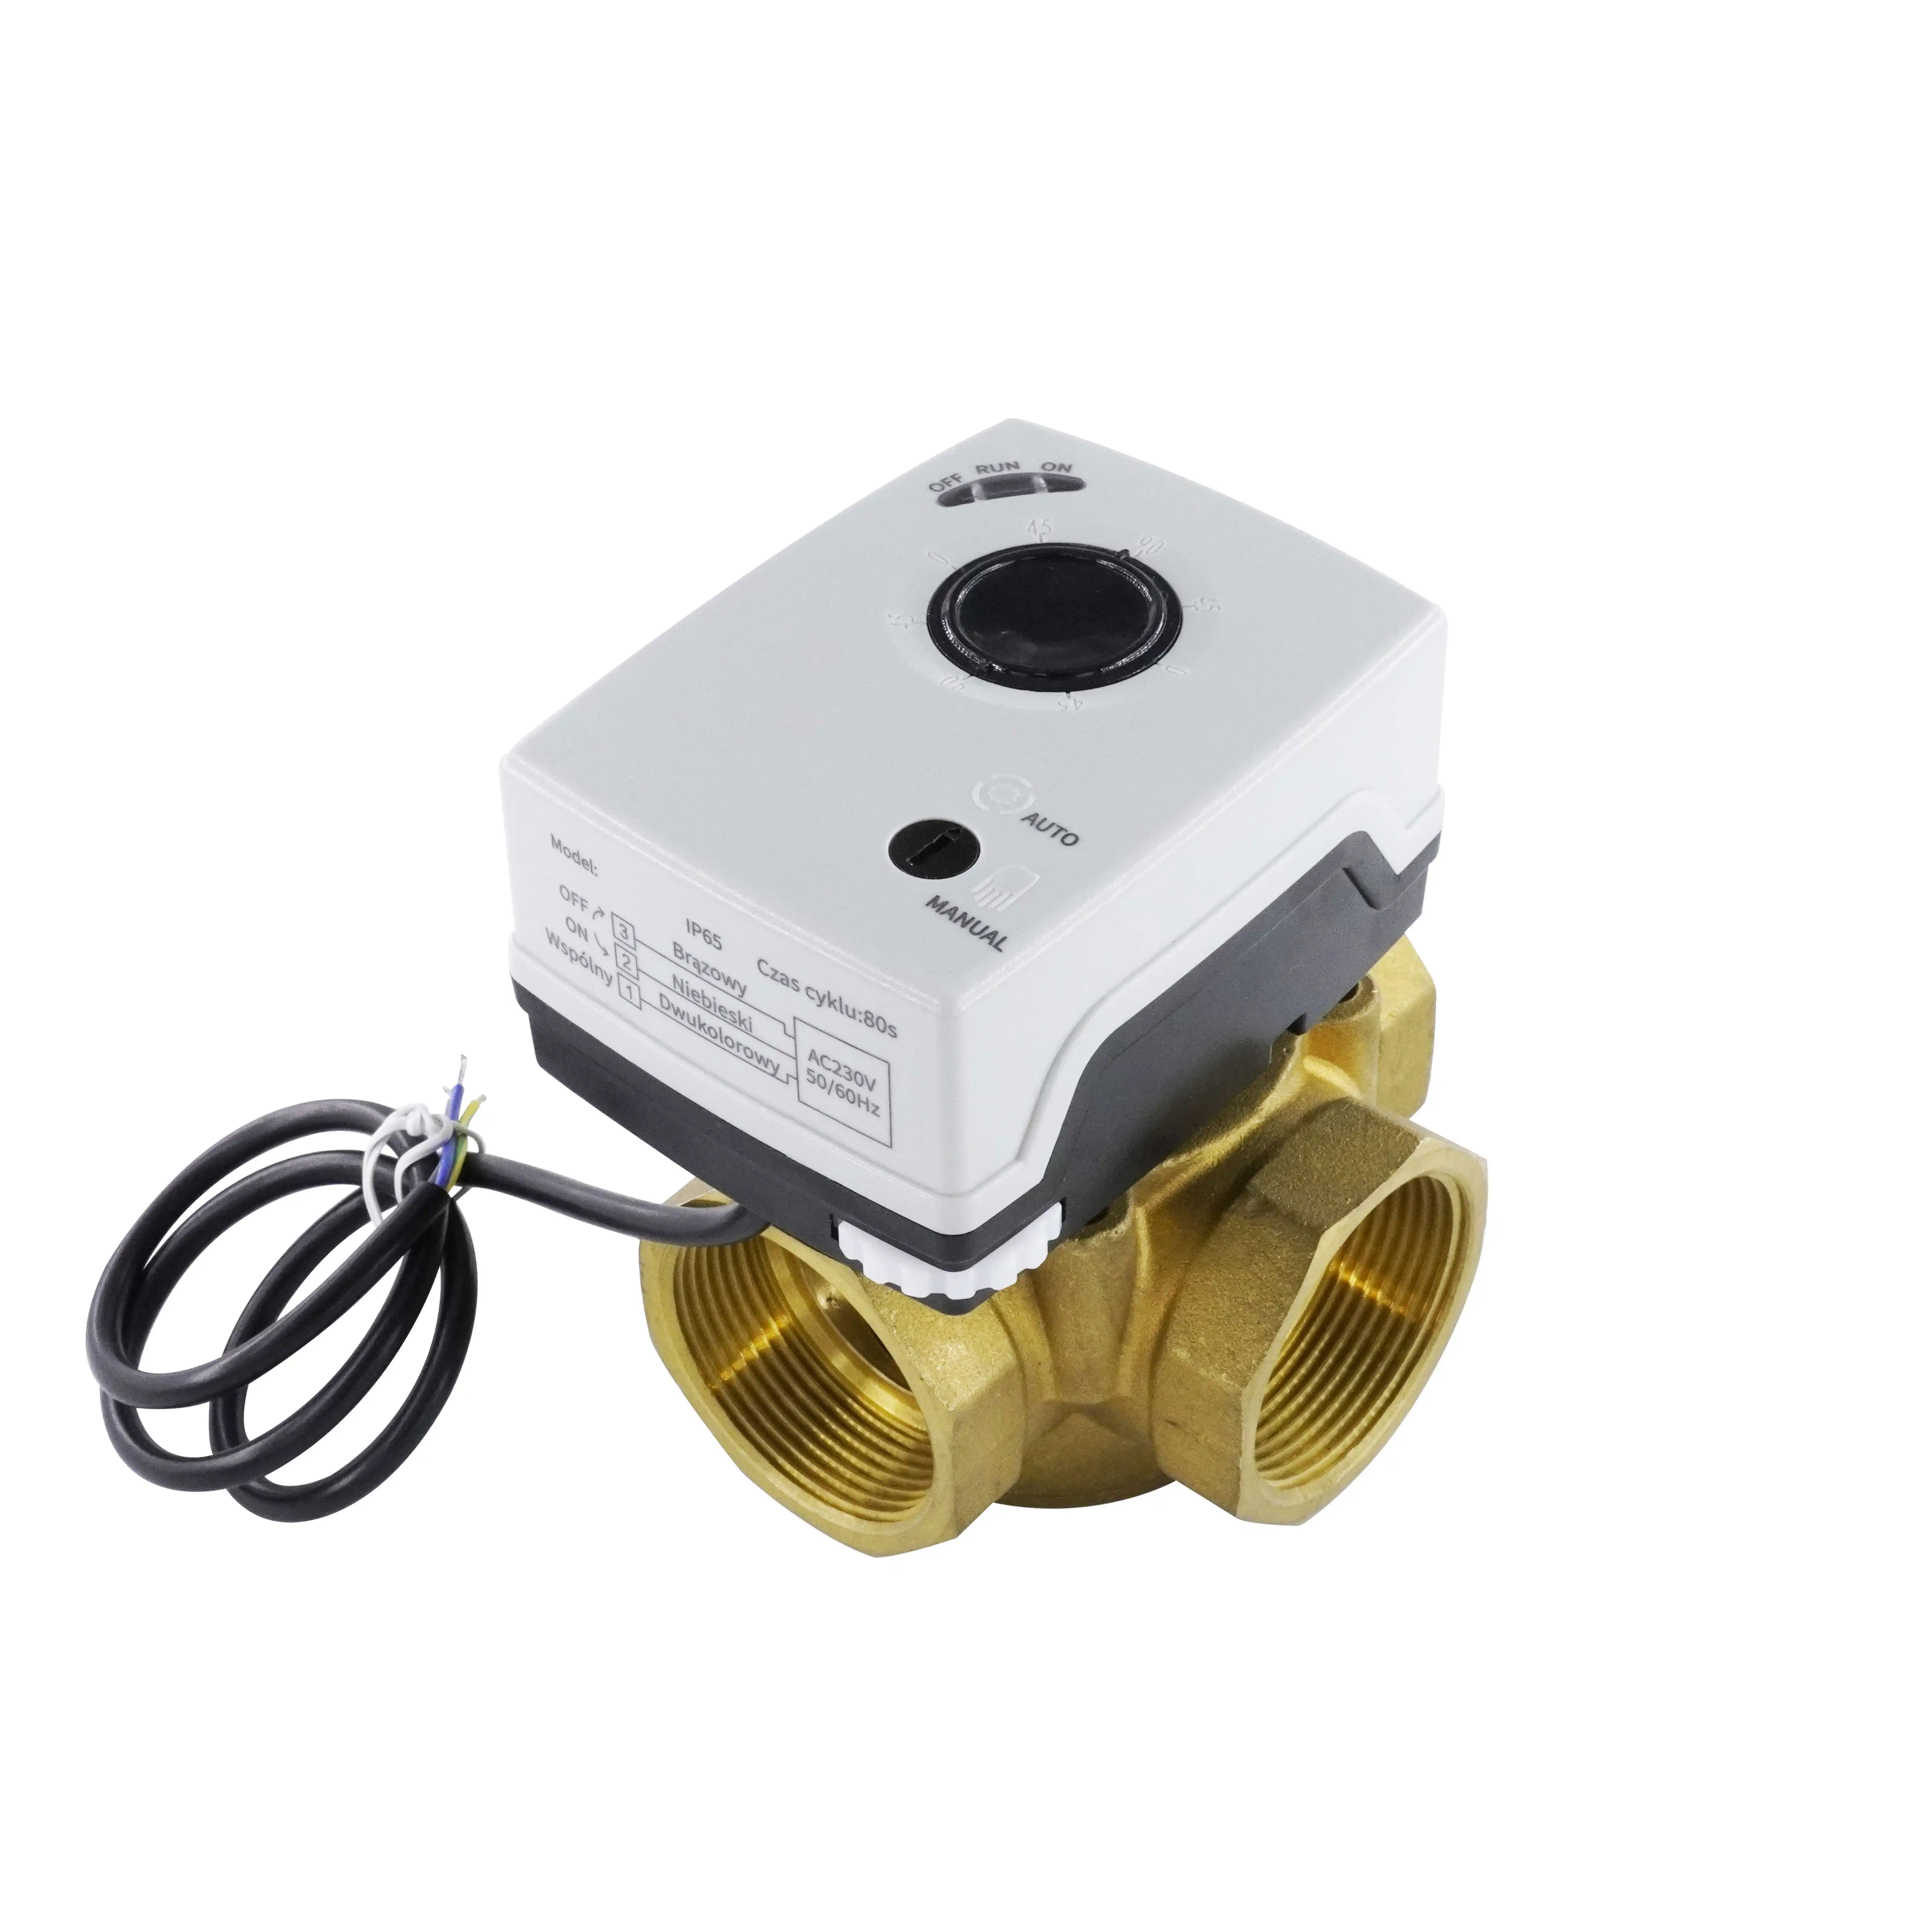 ZL-2143 Brass 3 4 way actuator rotary motorized mixing valve